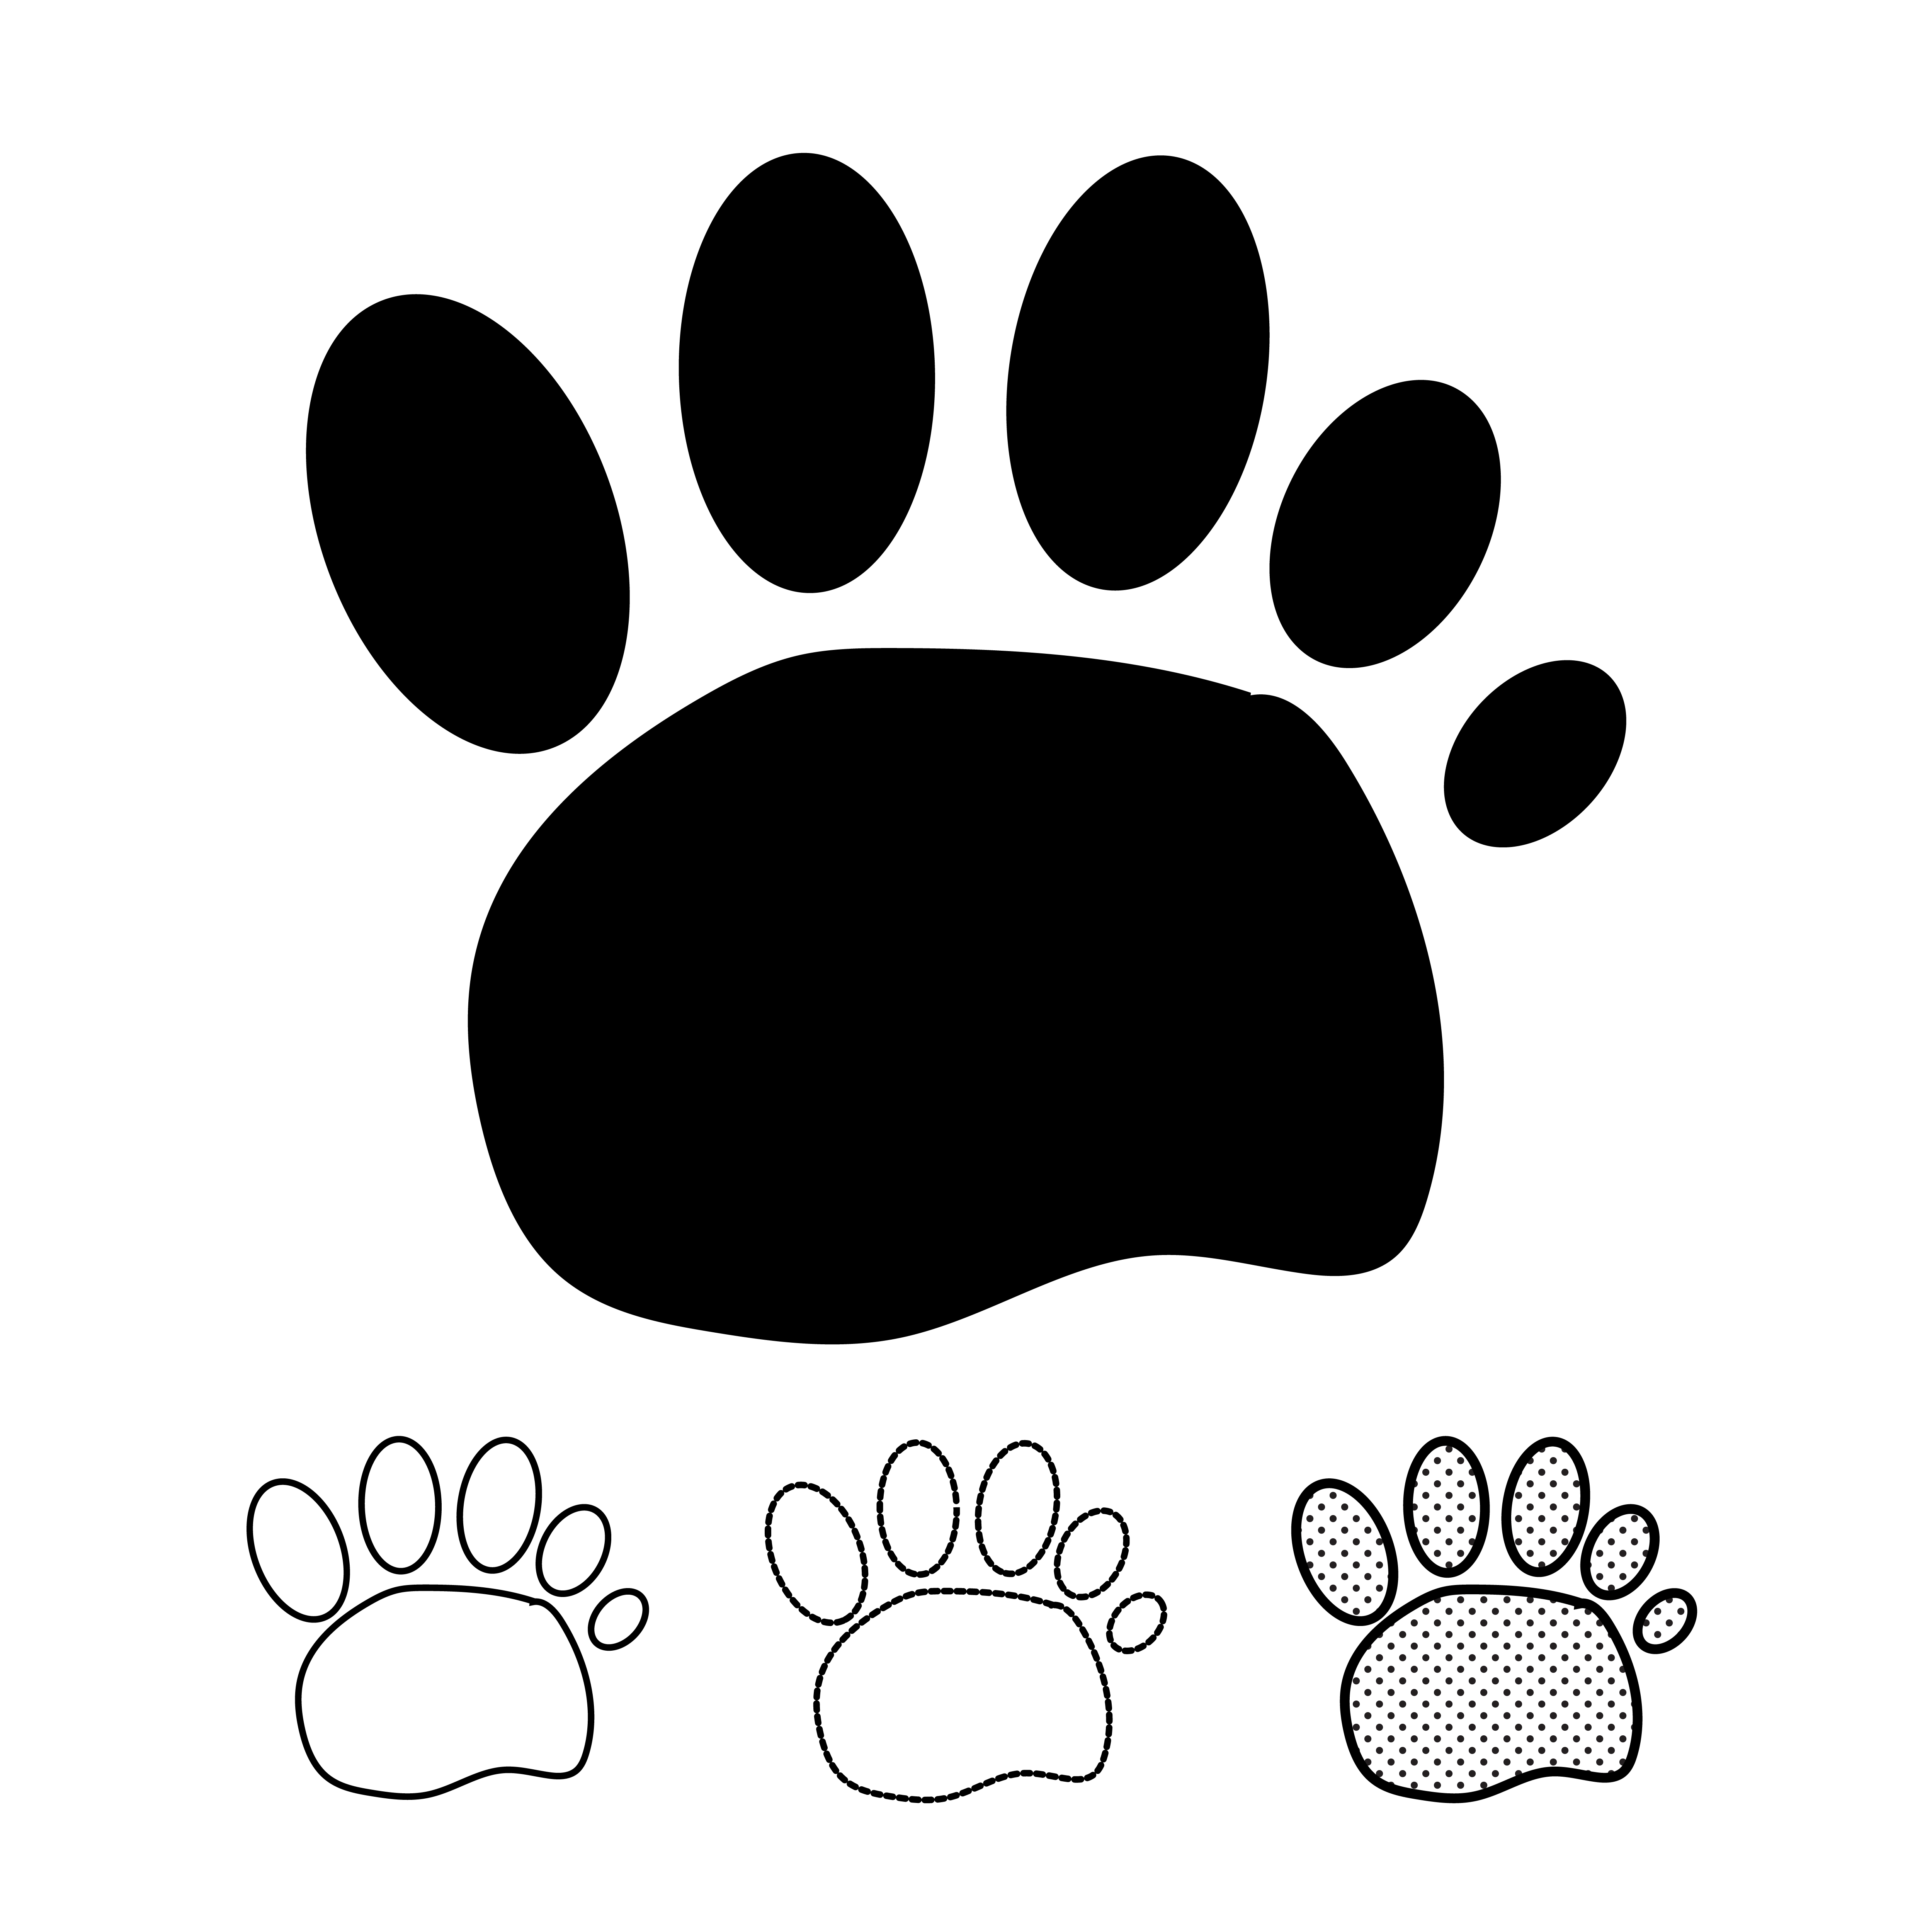 Download Animal footprint Icon Vector - Download Free Vectors, Clipart Graphics & Vector Art